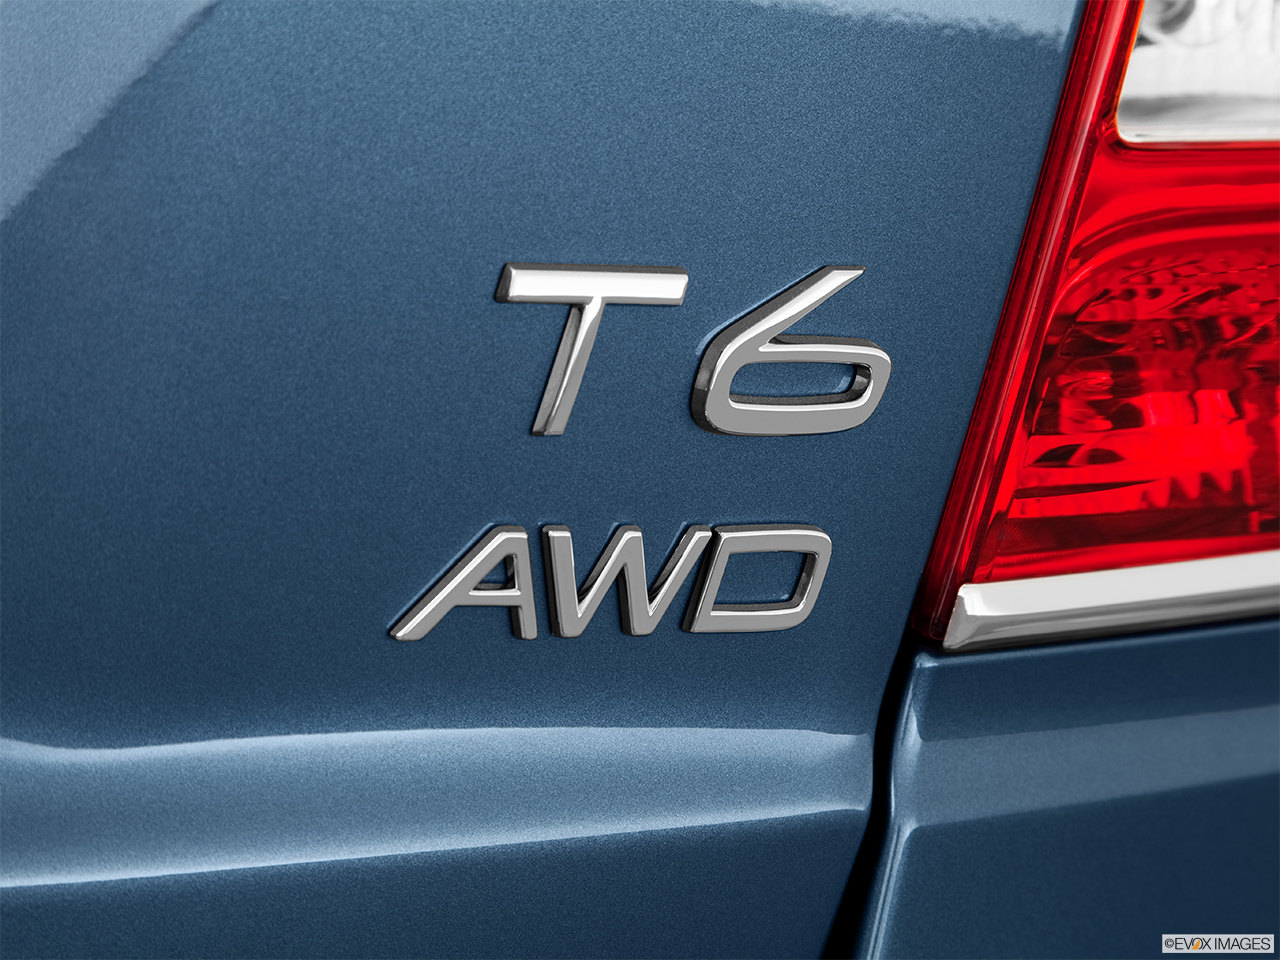 2014 Volvo S80 T6 AWD Platinum Exterior Bonus Shots (no set spec) 